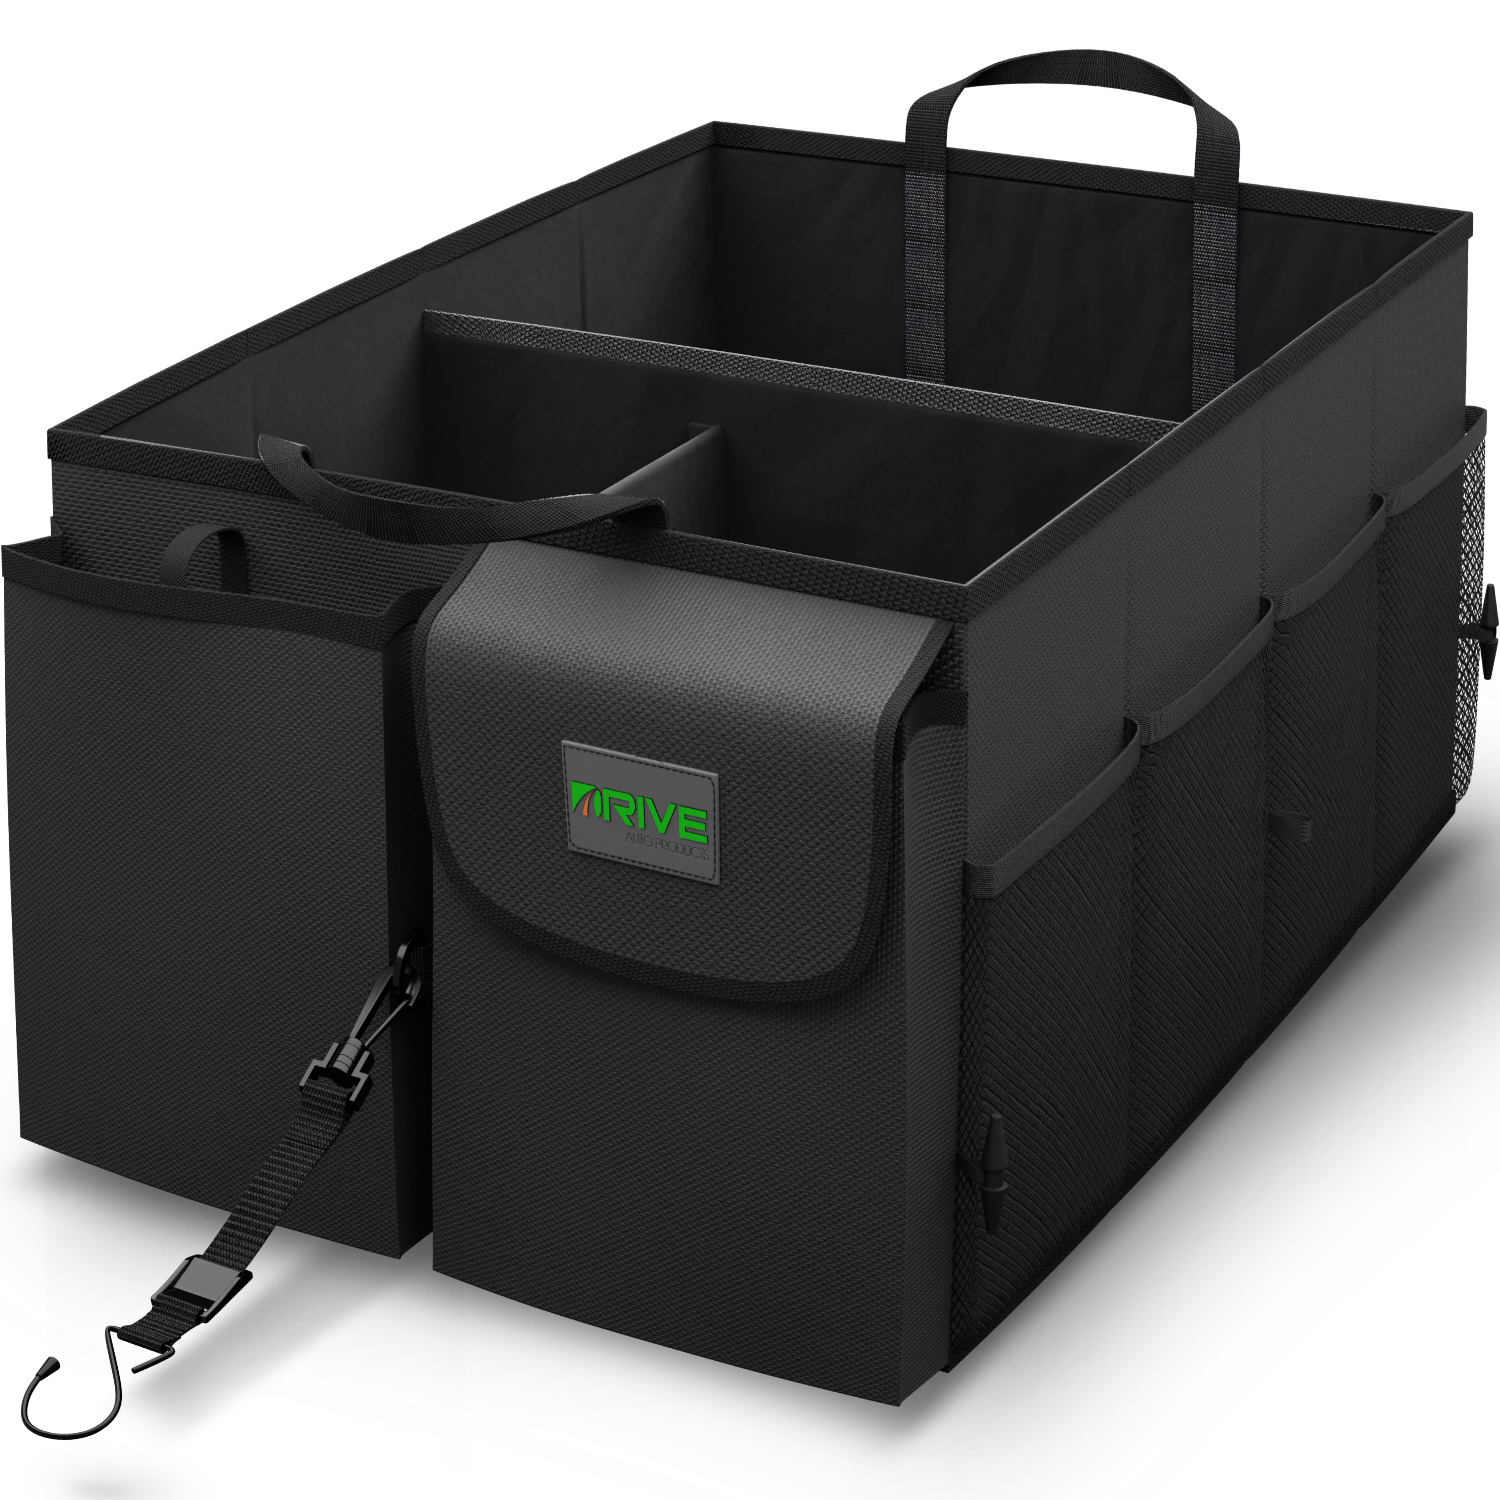 DRIVE Auto Products Multi Compartment Car Organizer and Trunk Storage, SUV Cargo Accessories Black - image 1 of 8